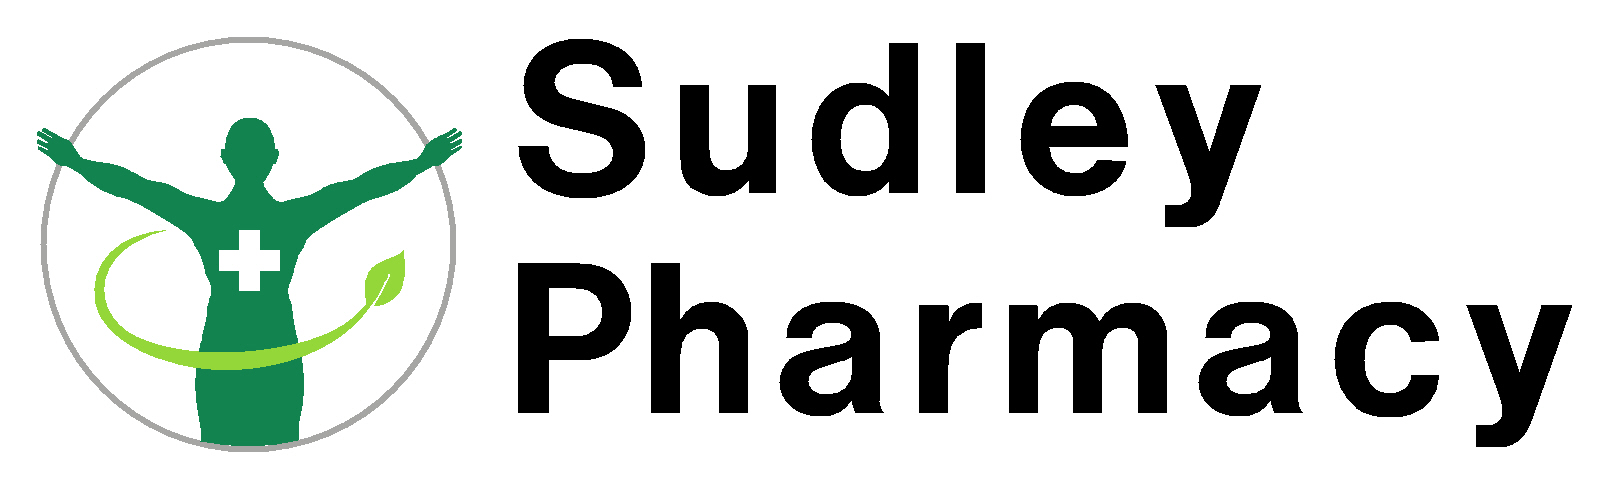 Sudley Pharmacy